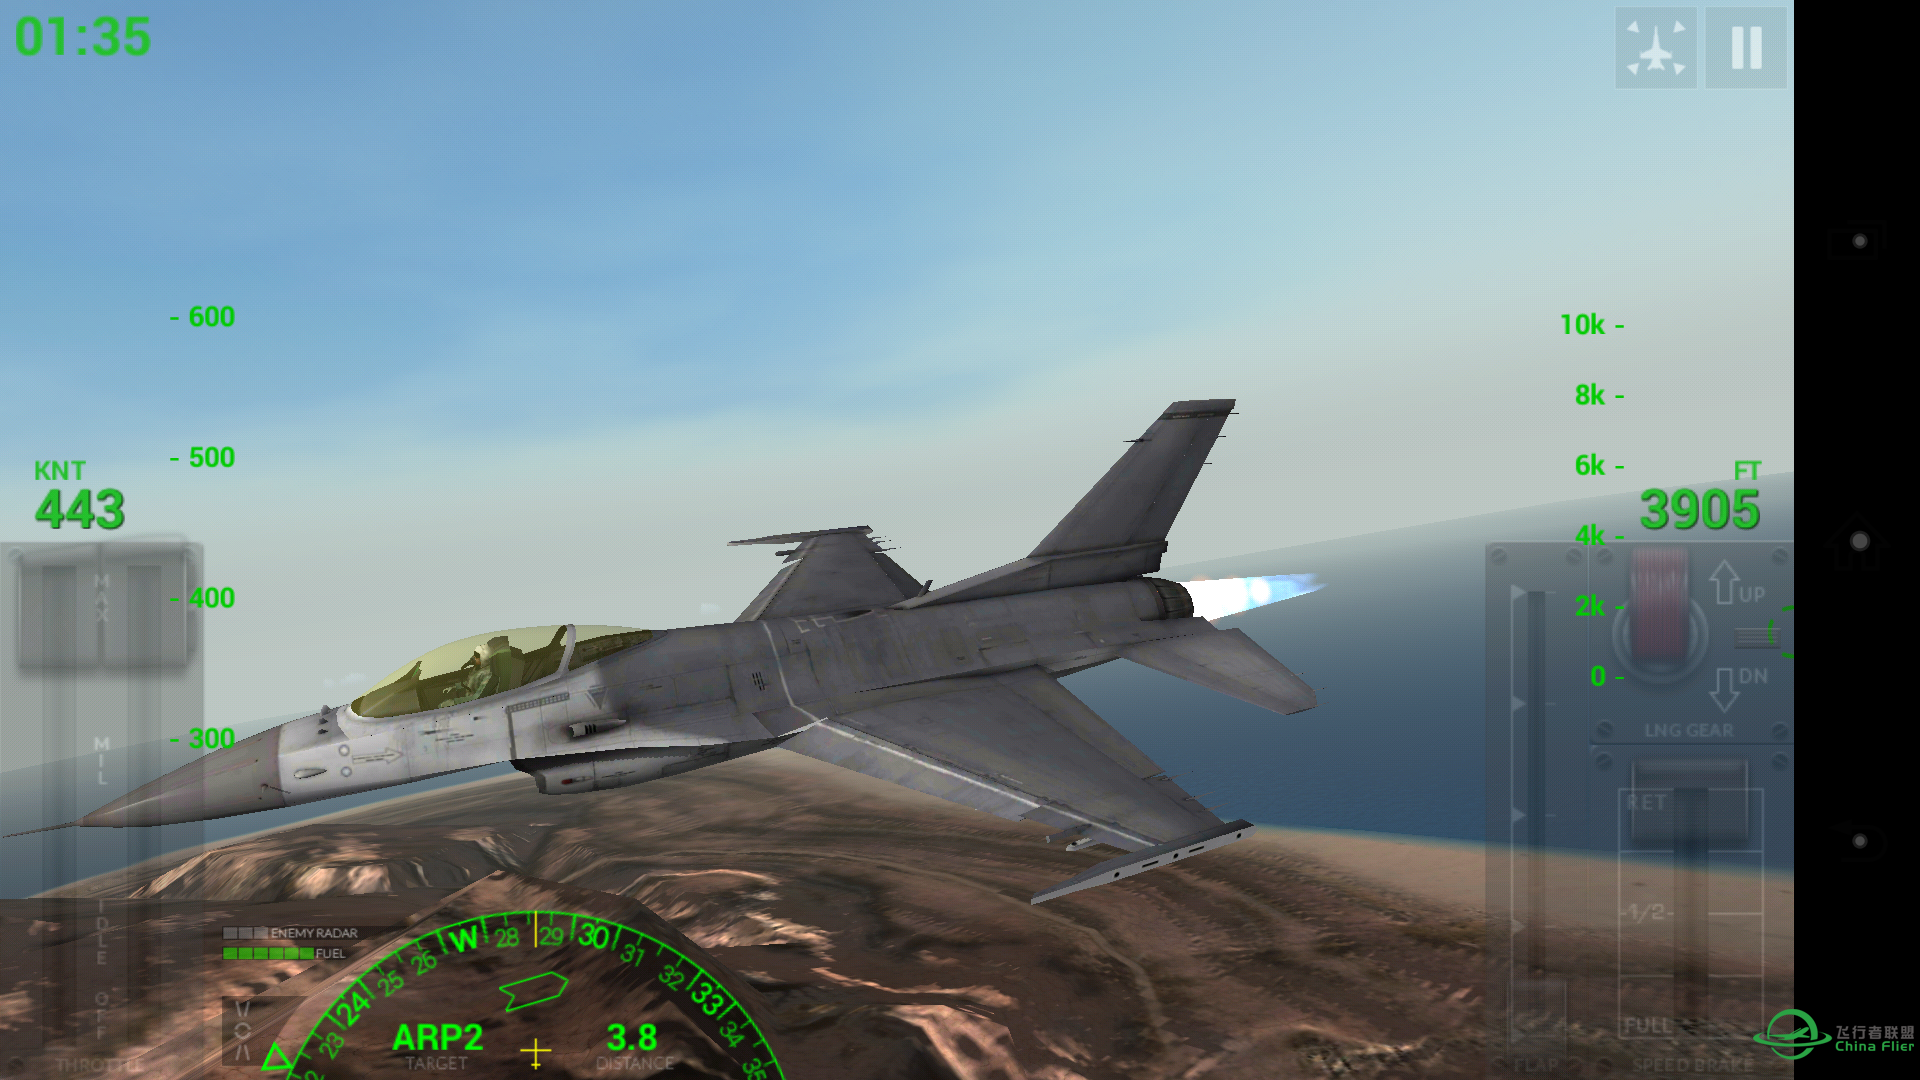 [截图而已]F18 Carrier Landing2 Pro-1317 